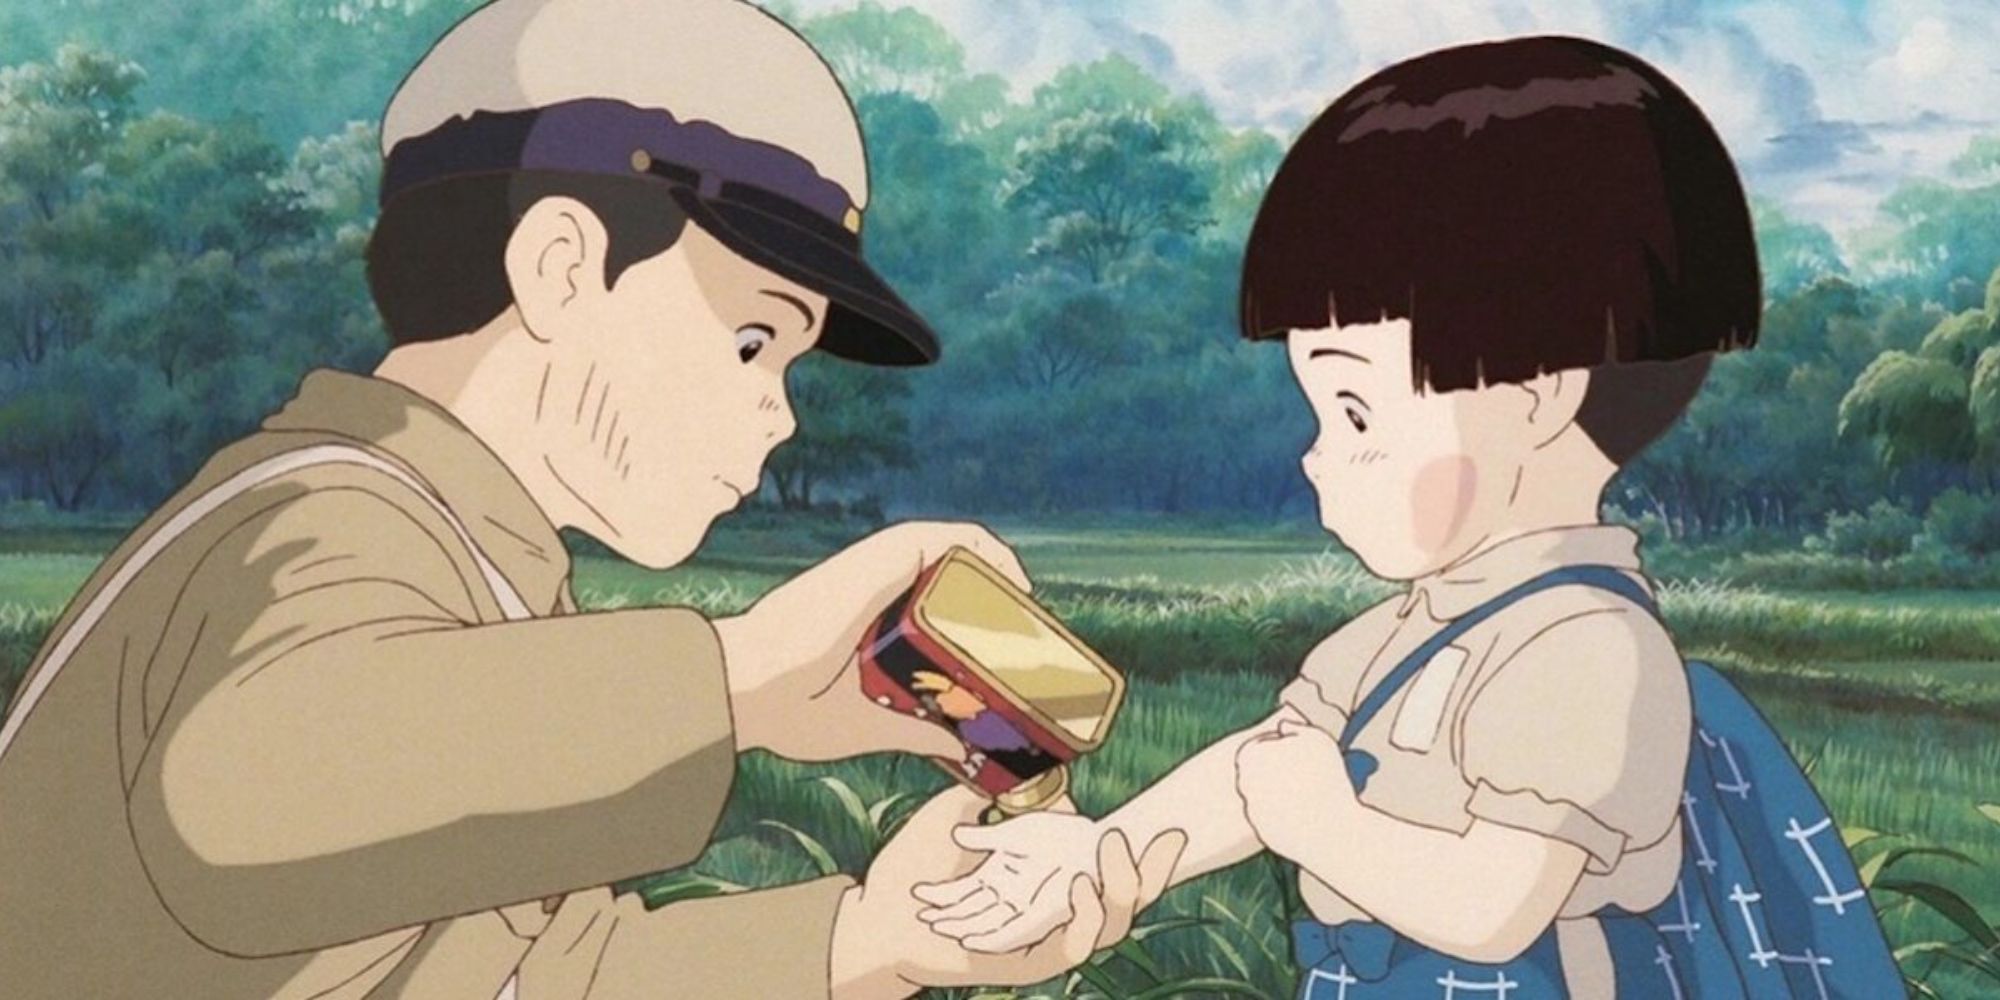 Seita tending to Setsuko in Studio Ghibli's Grave of the Fireflies